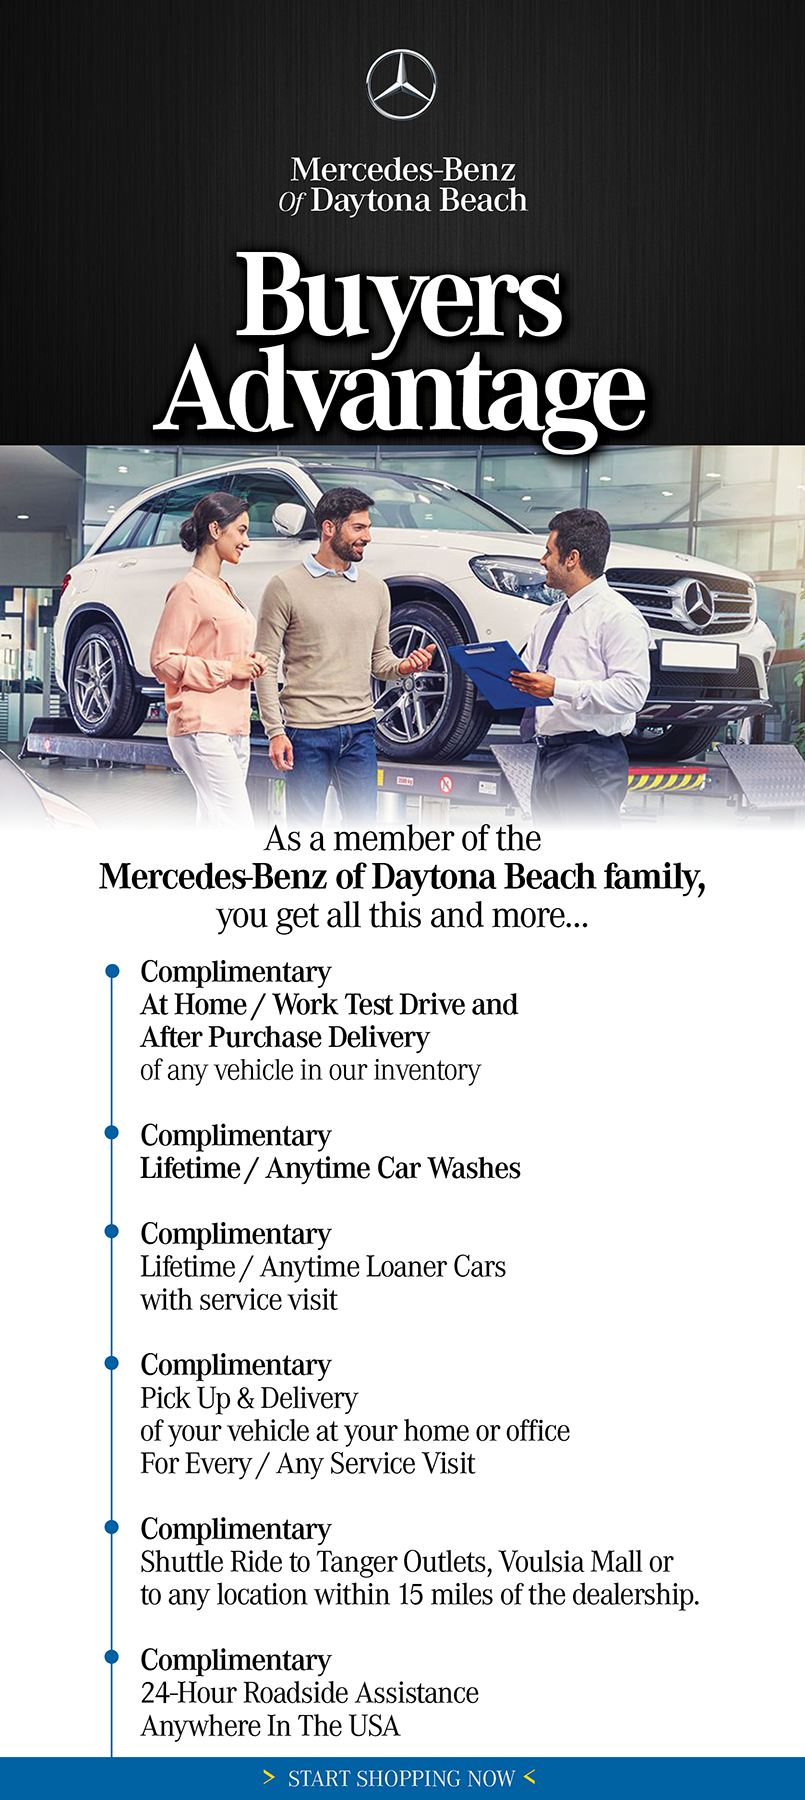 List of complementary services | Buyer's Advantage | Mercedes-Benz of Daytona Beach in Daytona Beach FL